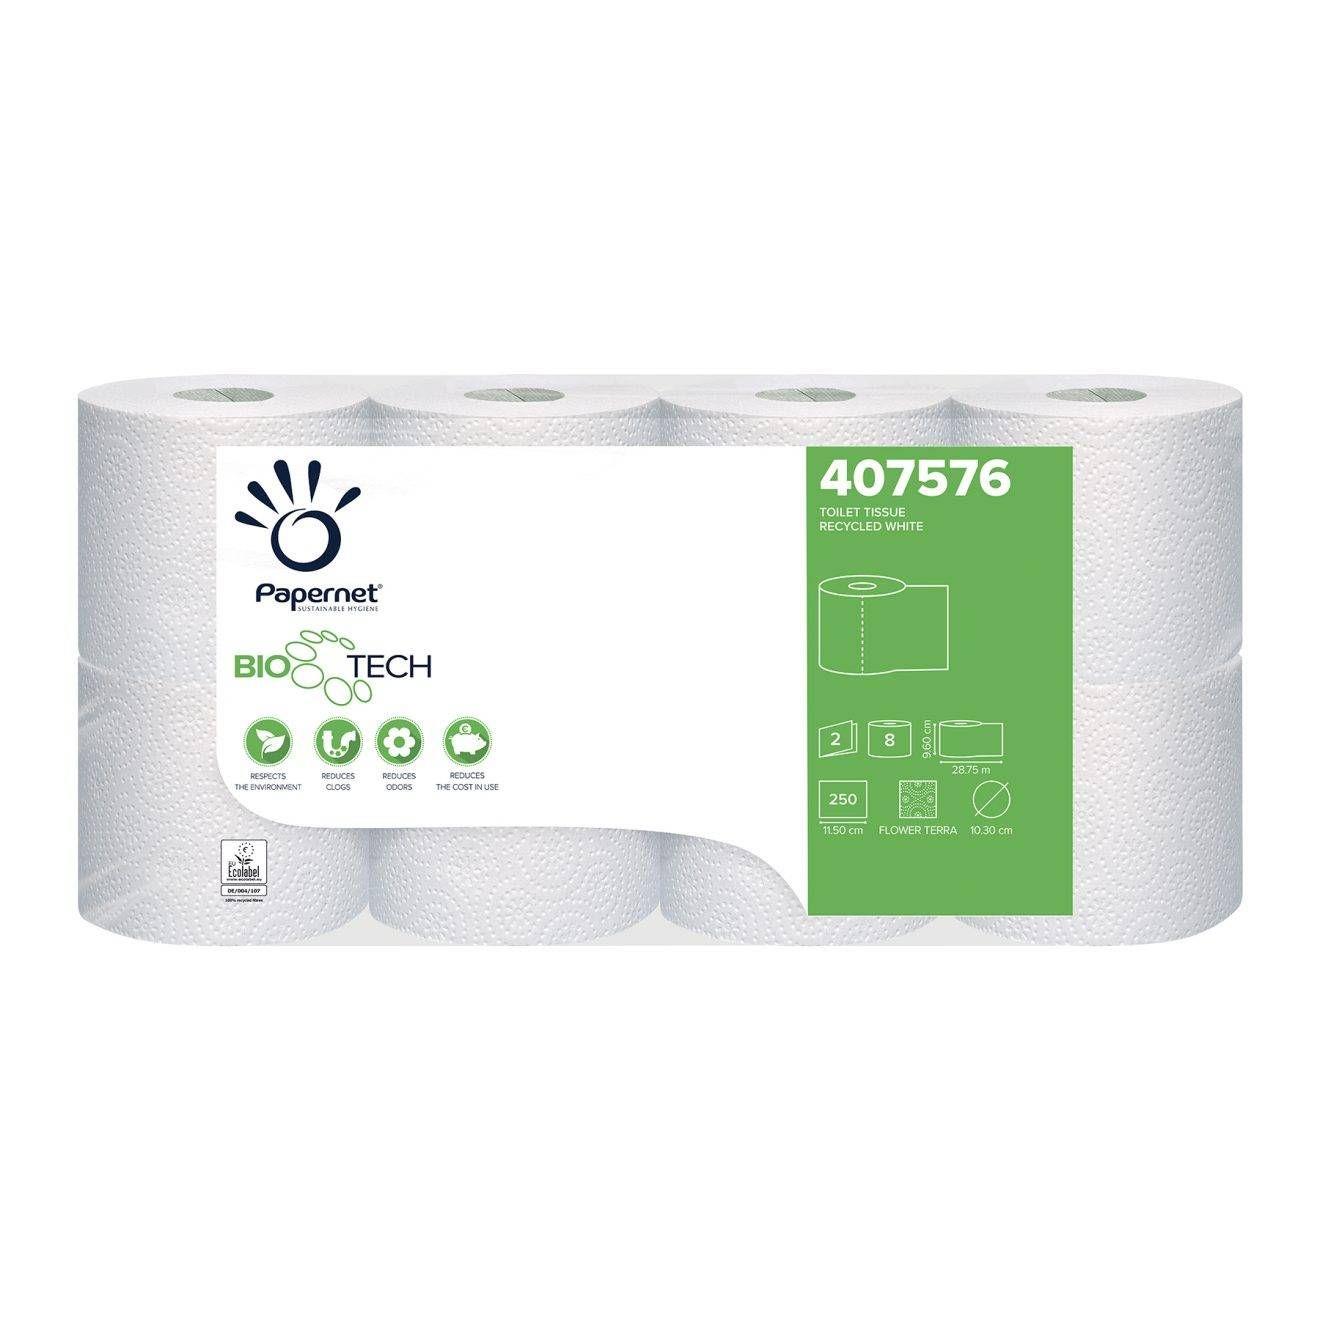 Toilettenpapier 2 lagig 250 Blatt Bio Tech Recycling 